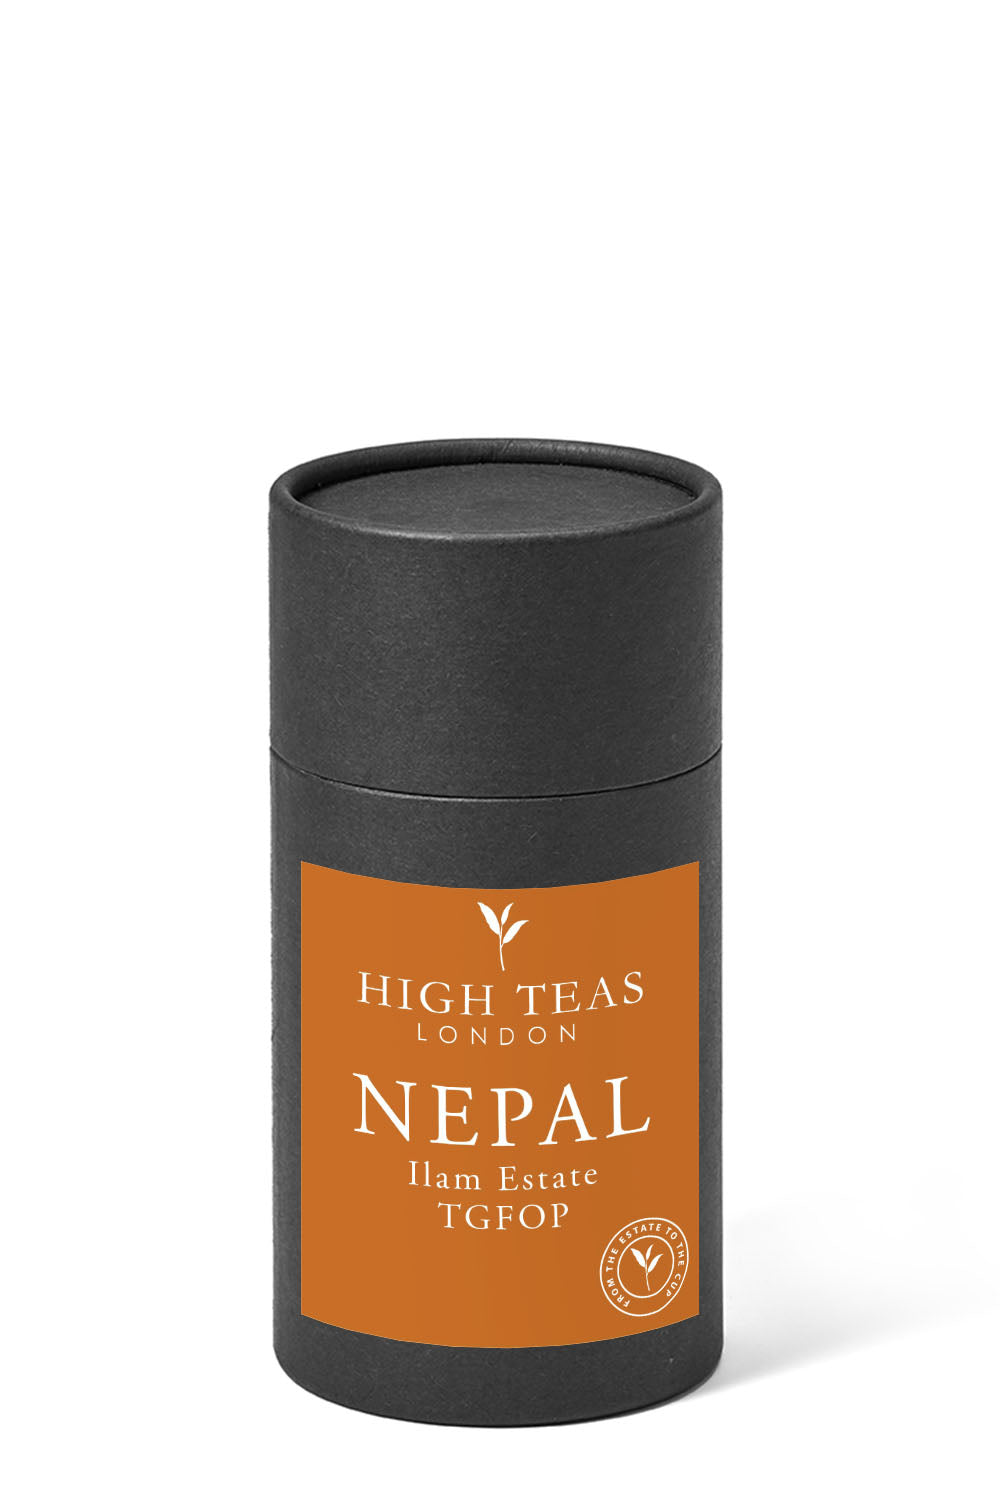 Nepal - Ilam Estate 2nd Flush TGFOP-60g gift-Loose Leaf Tea-High Teas